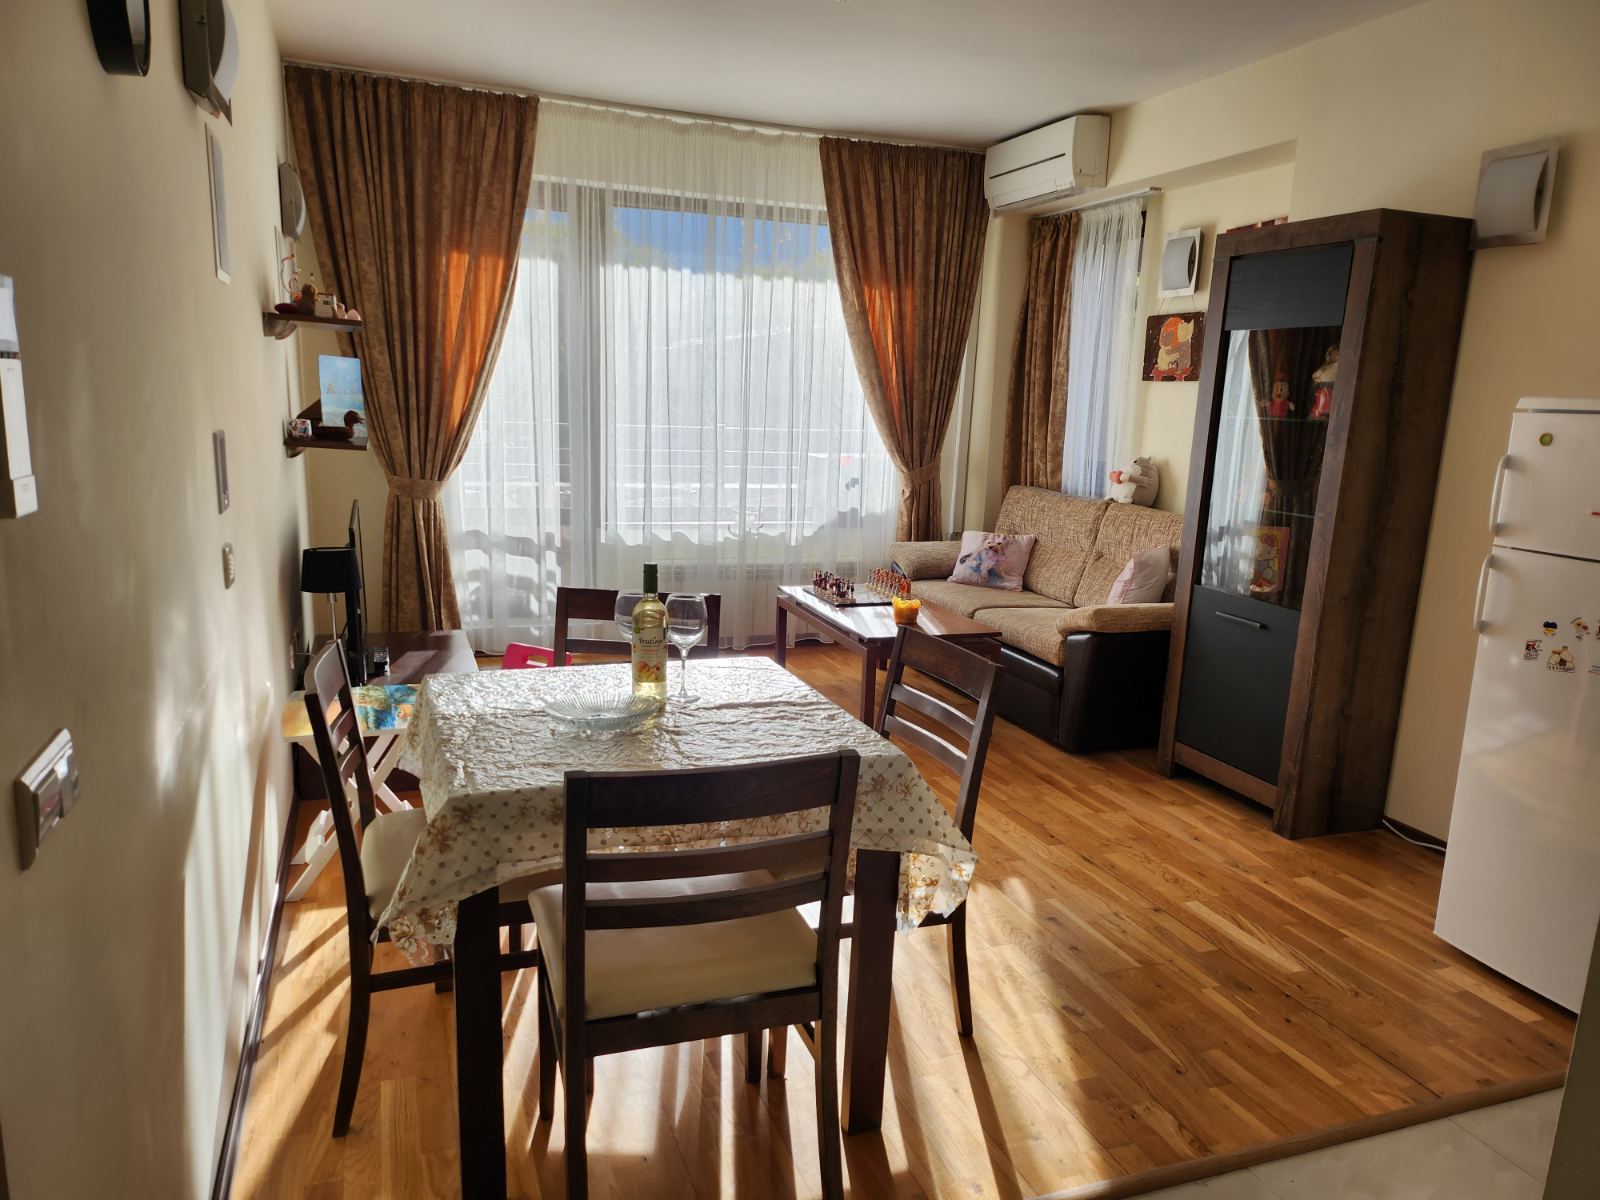 Тристаен апартамент с южно изложение за продажба в комплекс Мурите, до Pirin Golf